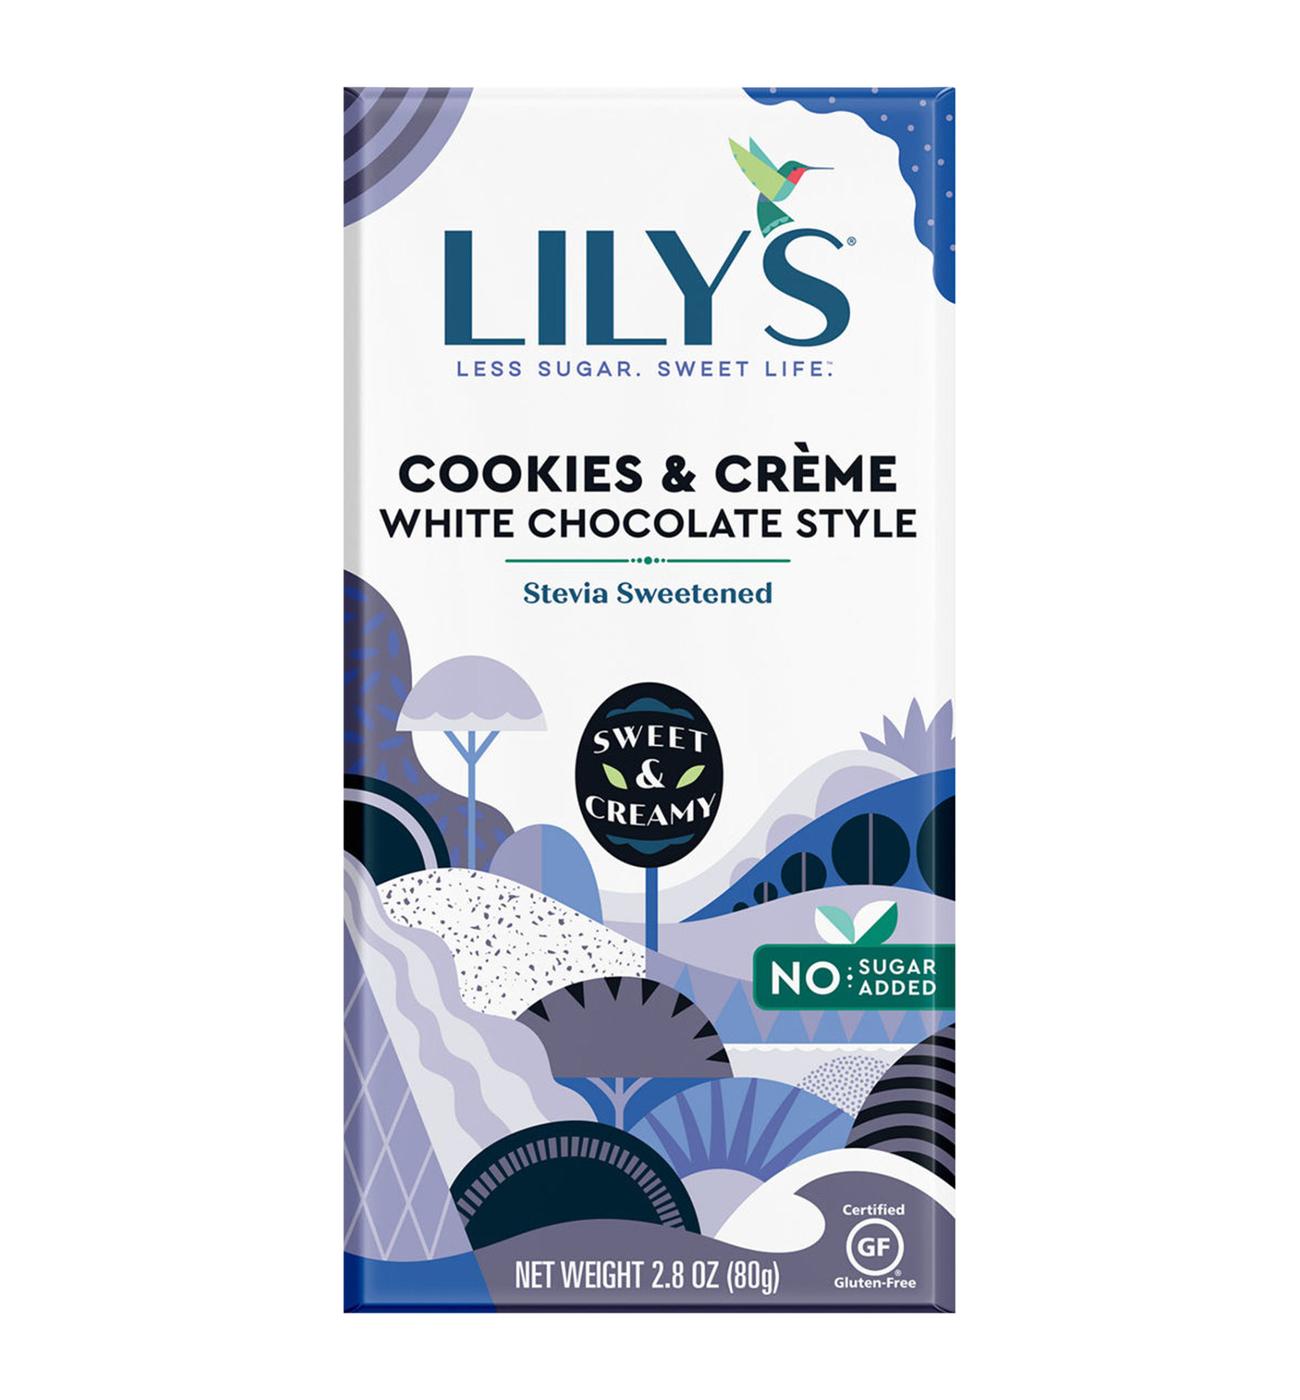 Lily's Sweets Chocolate Bar Dark Crispy Rice 85g